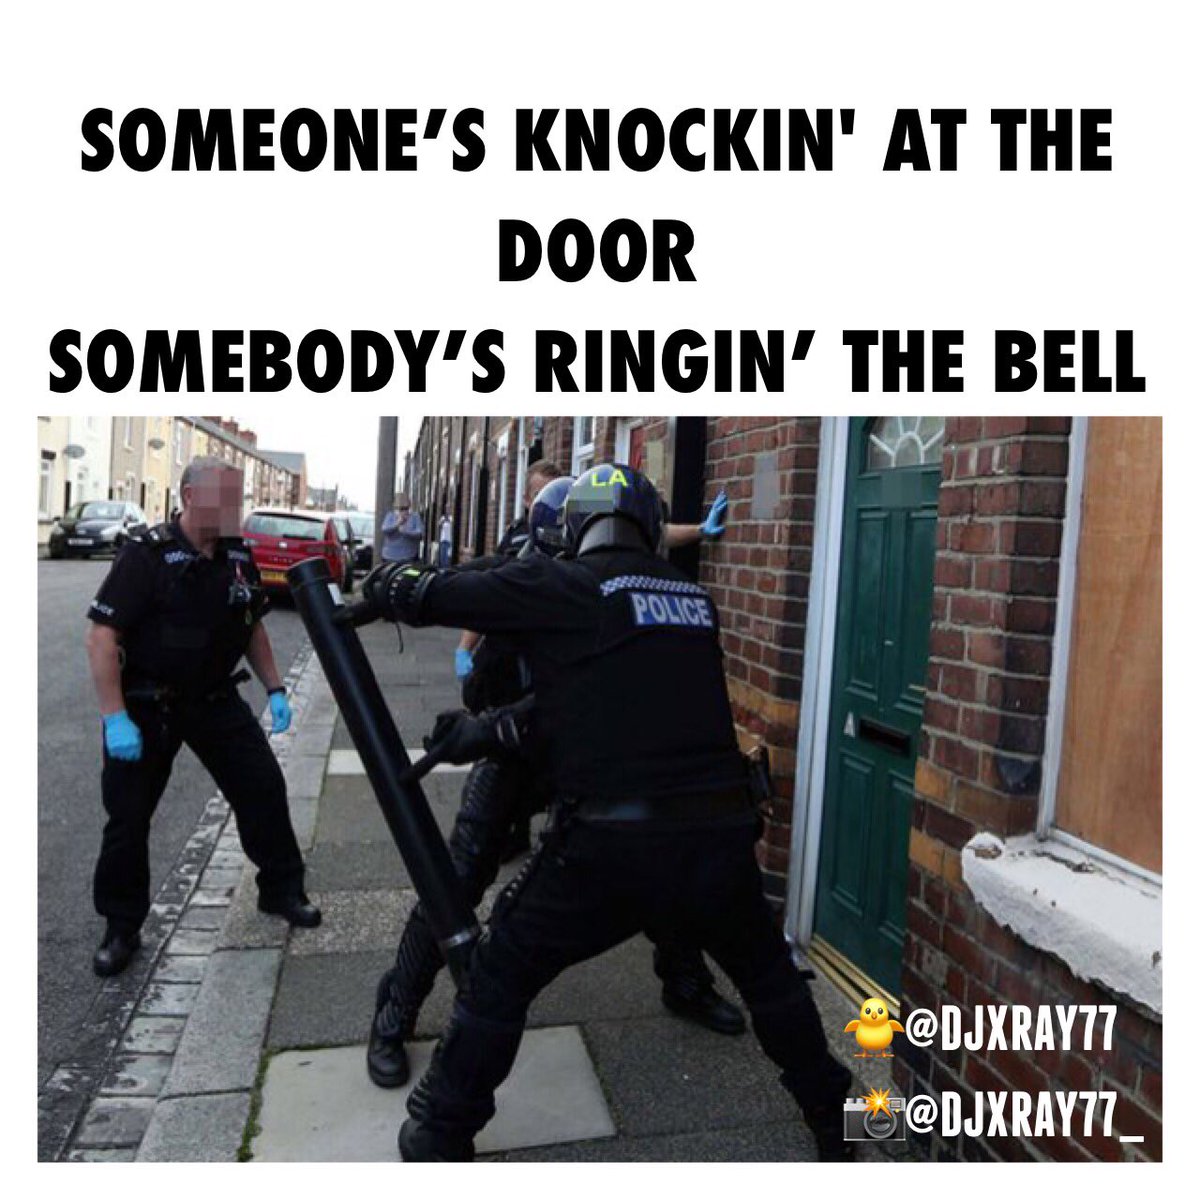 That advert drives me nutssss 🥜🥜😩

#postcodelottery #postcode #lottery #advert #tvadvert #tv #annoying #song #paulmccartney #wings #police #policeraid #door #bell #meme #memes #memesdaily #dankmemes #xraymemes